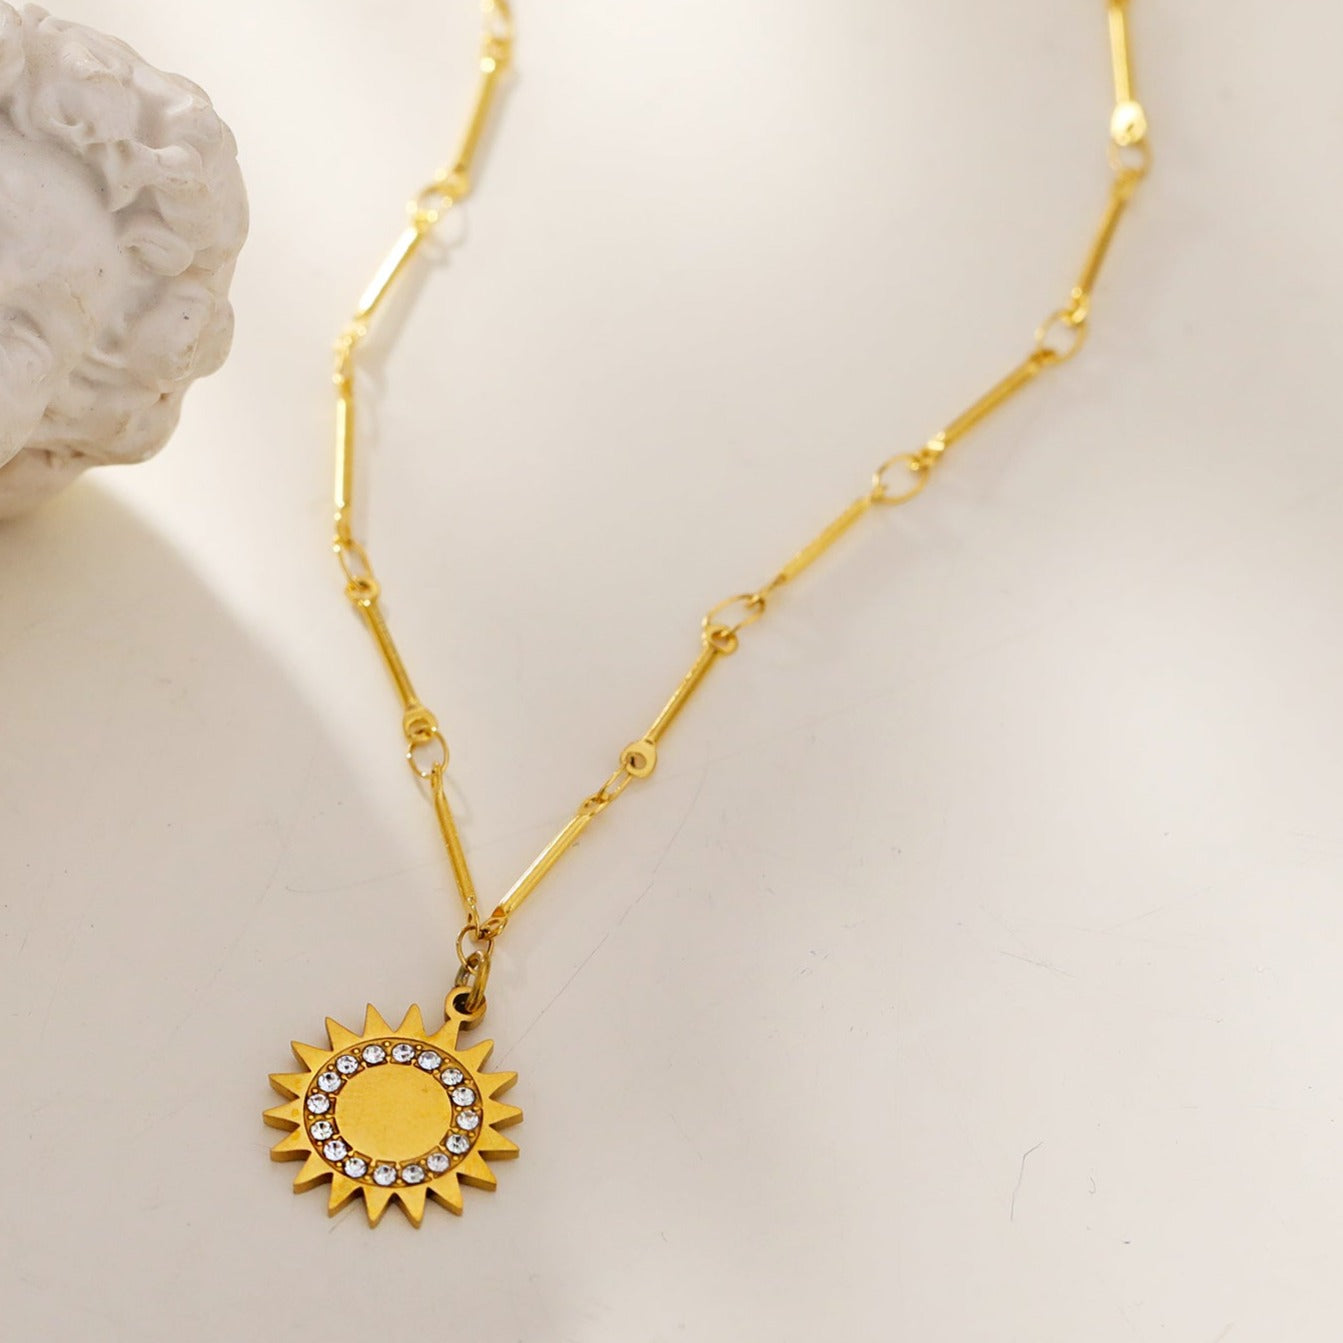 Style NOMIA 98811: Radiant Sunburst Pendant Zirconia Chain Necklace.